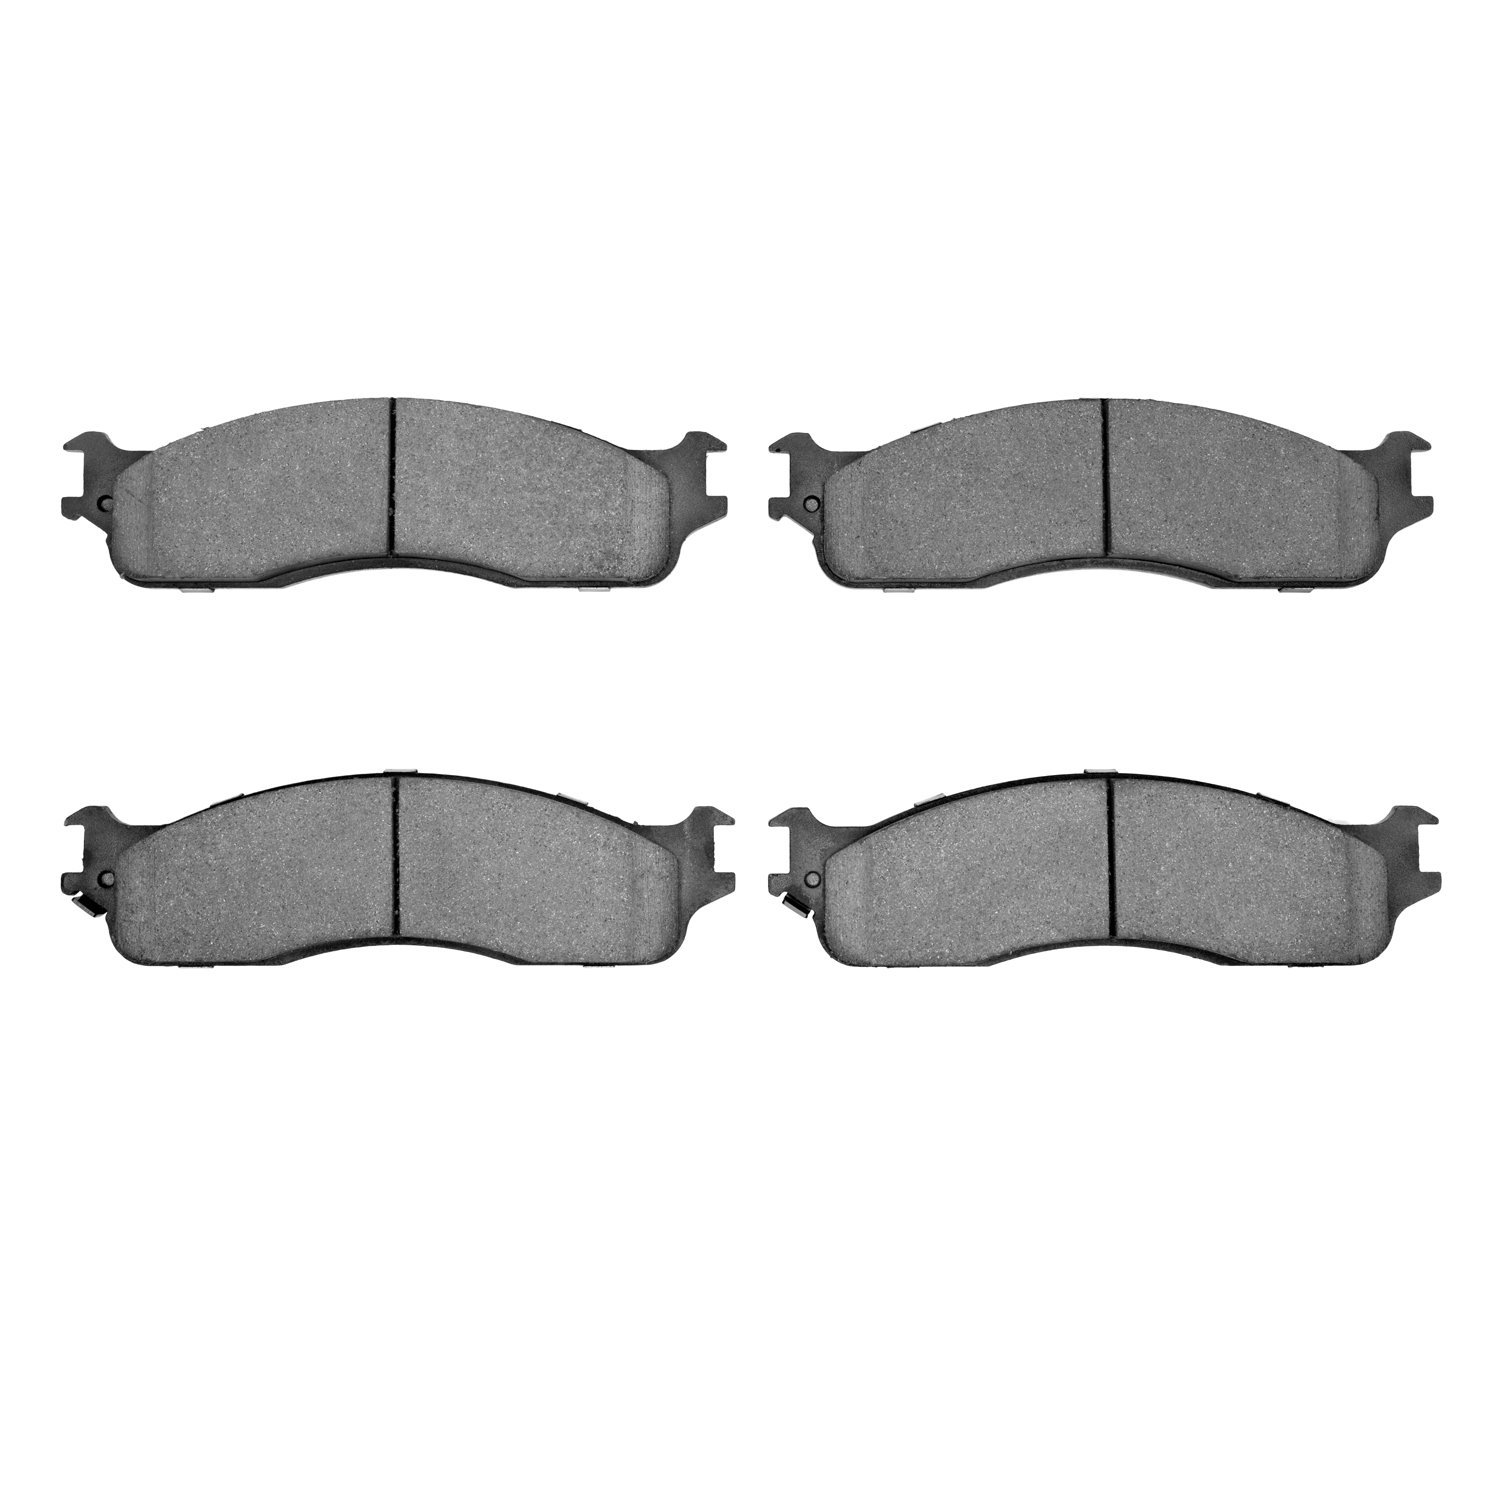 1310-0965-00 3000-Series Ceramic Brake Pads, 2003-2008 Mopar, Position: Front